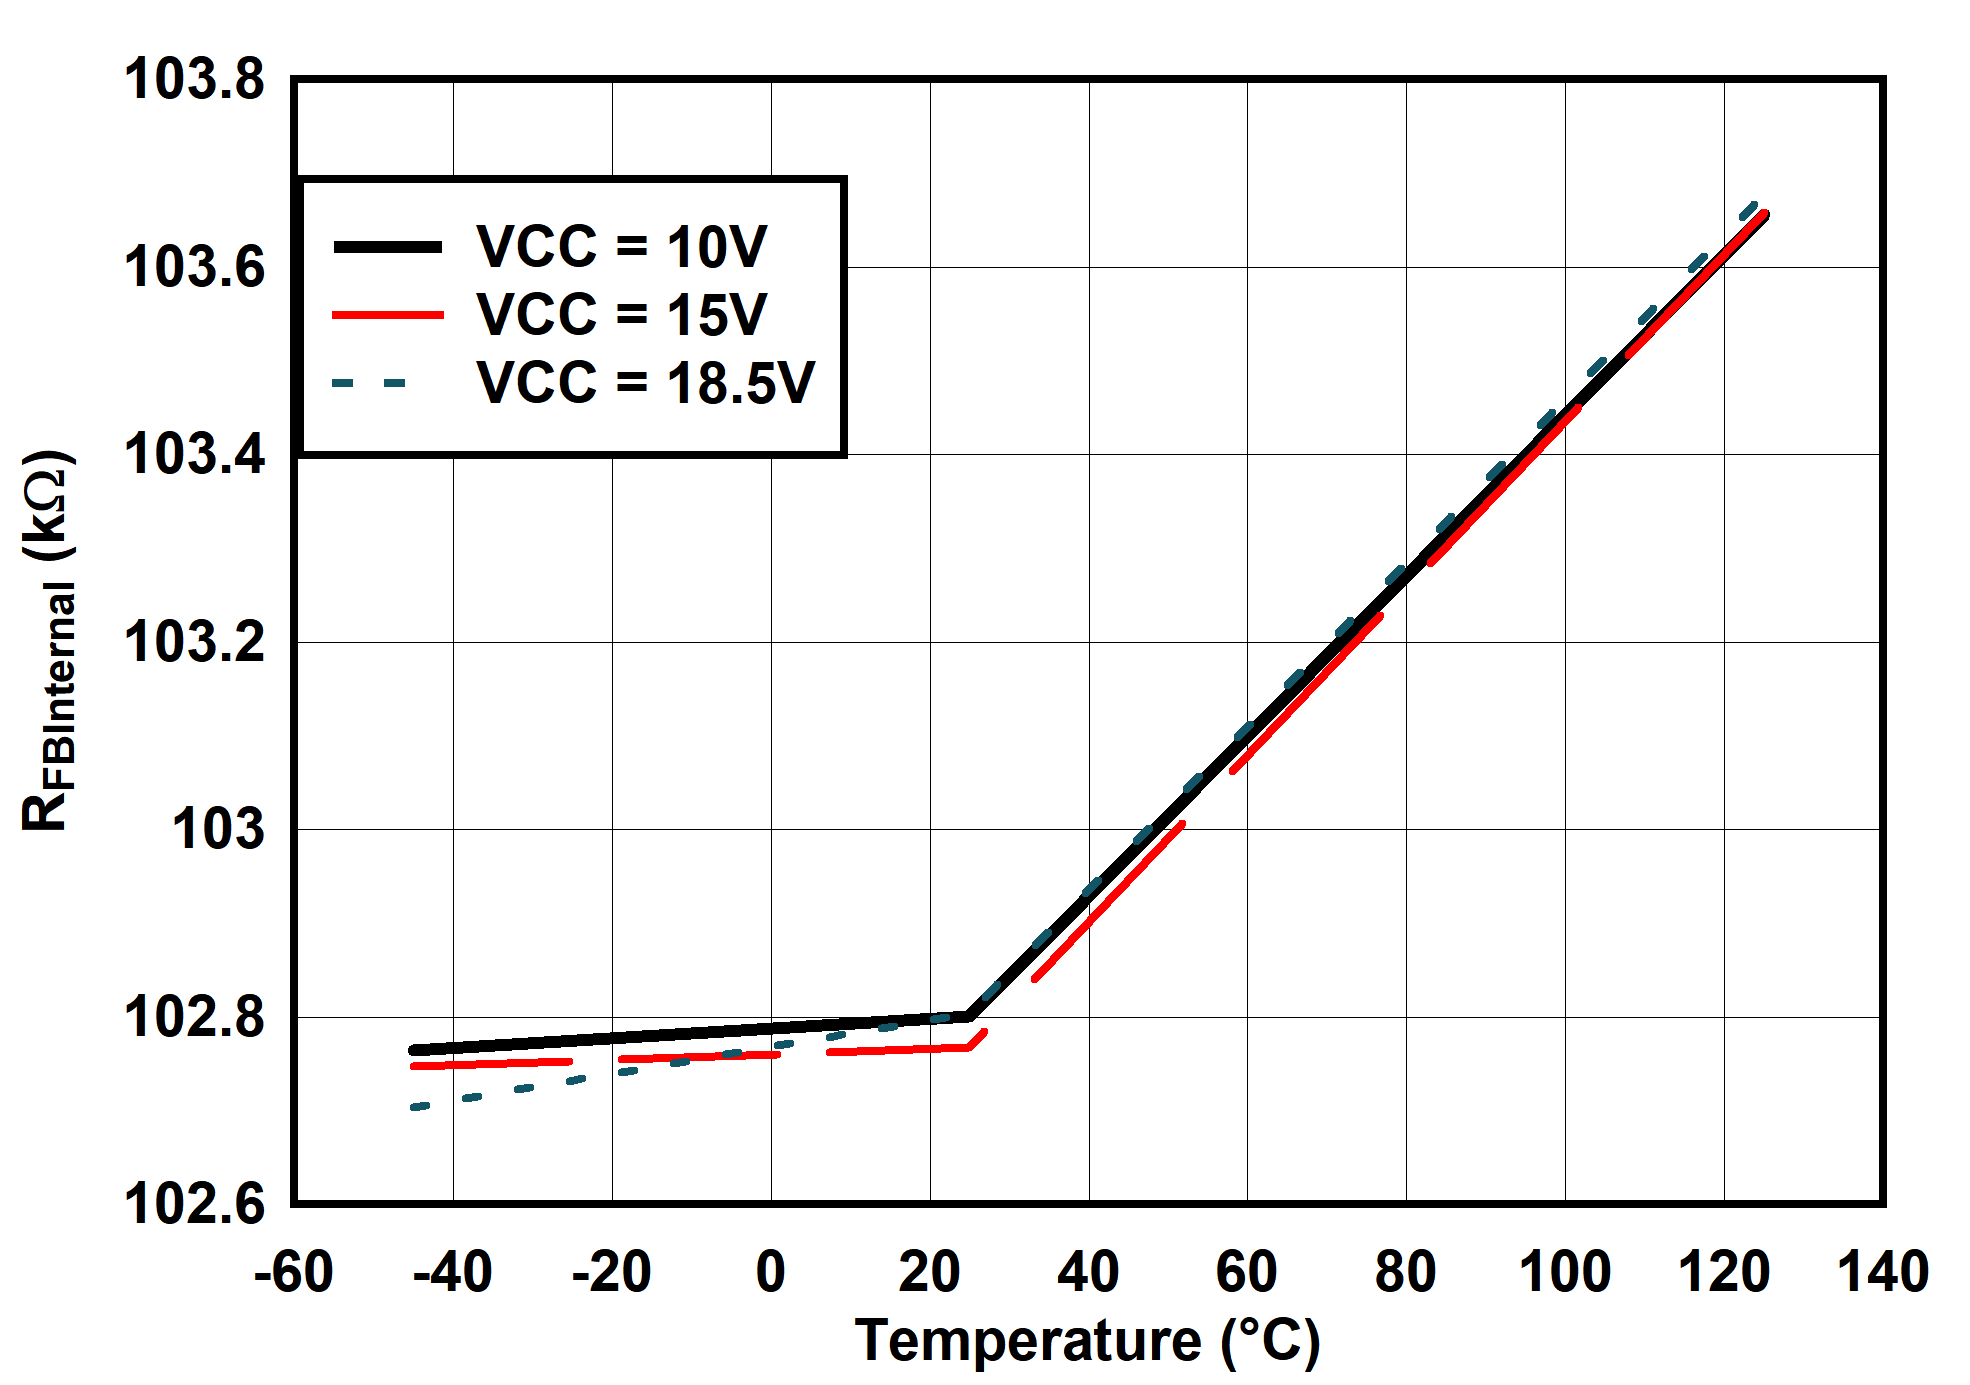 UCC25660 RFBInternal vs Temperature